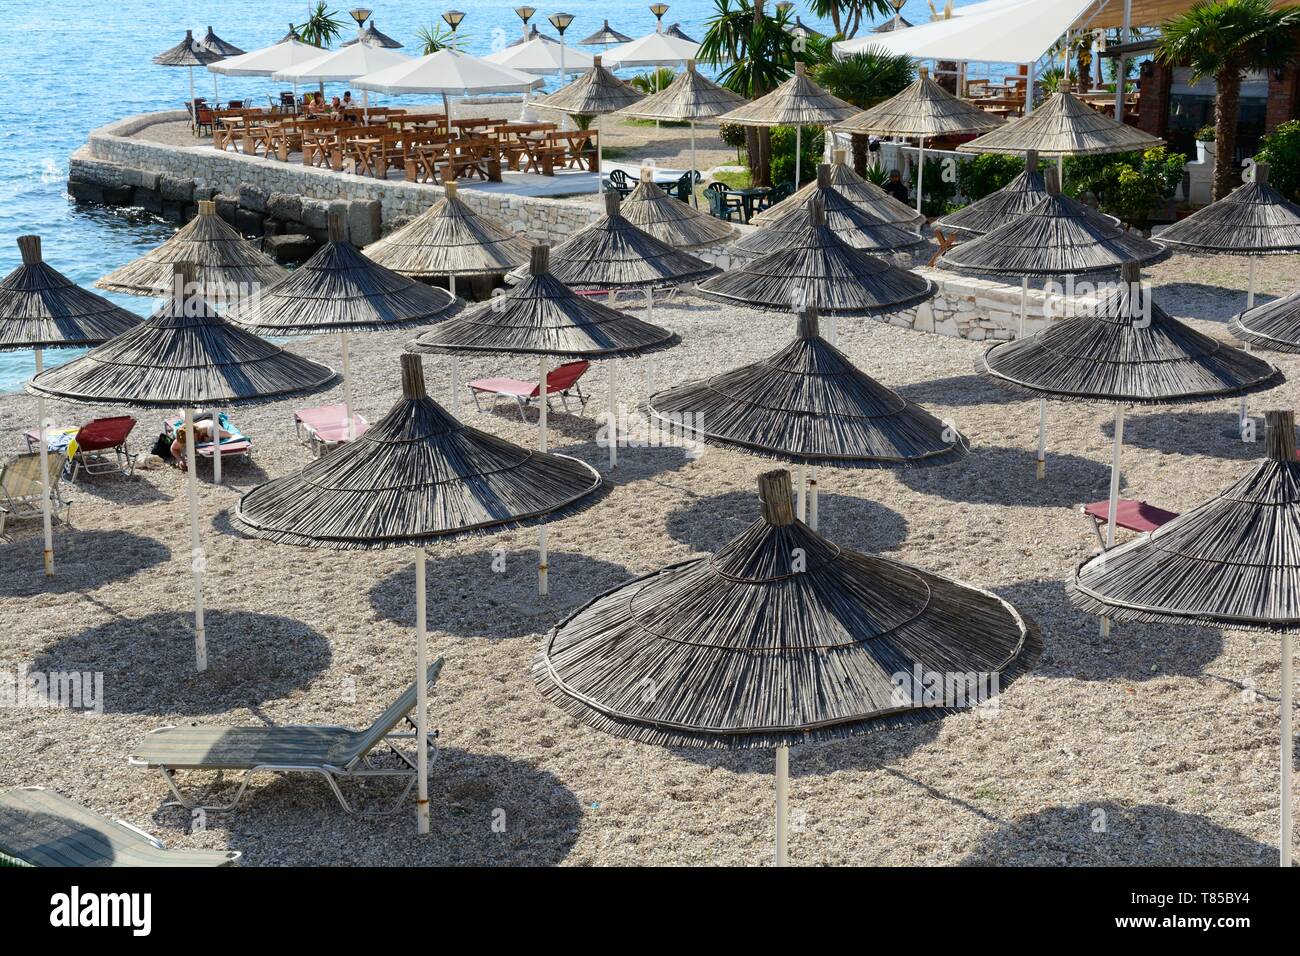 Straw umbrellas parasoles on the beach at Saranda Ionian sea Albania Stock Photo